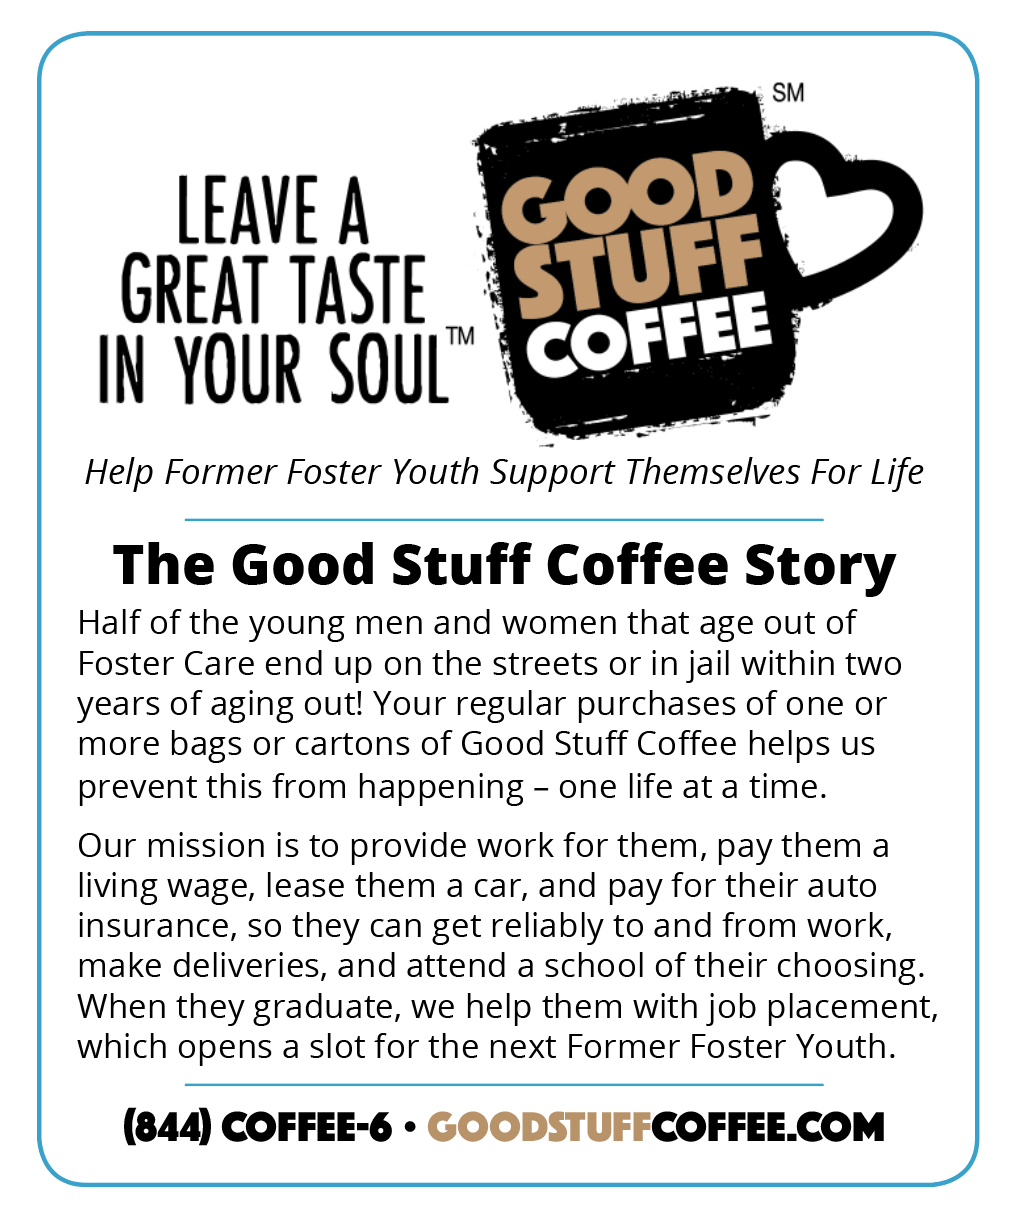 The Good Stuff Coffee Story